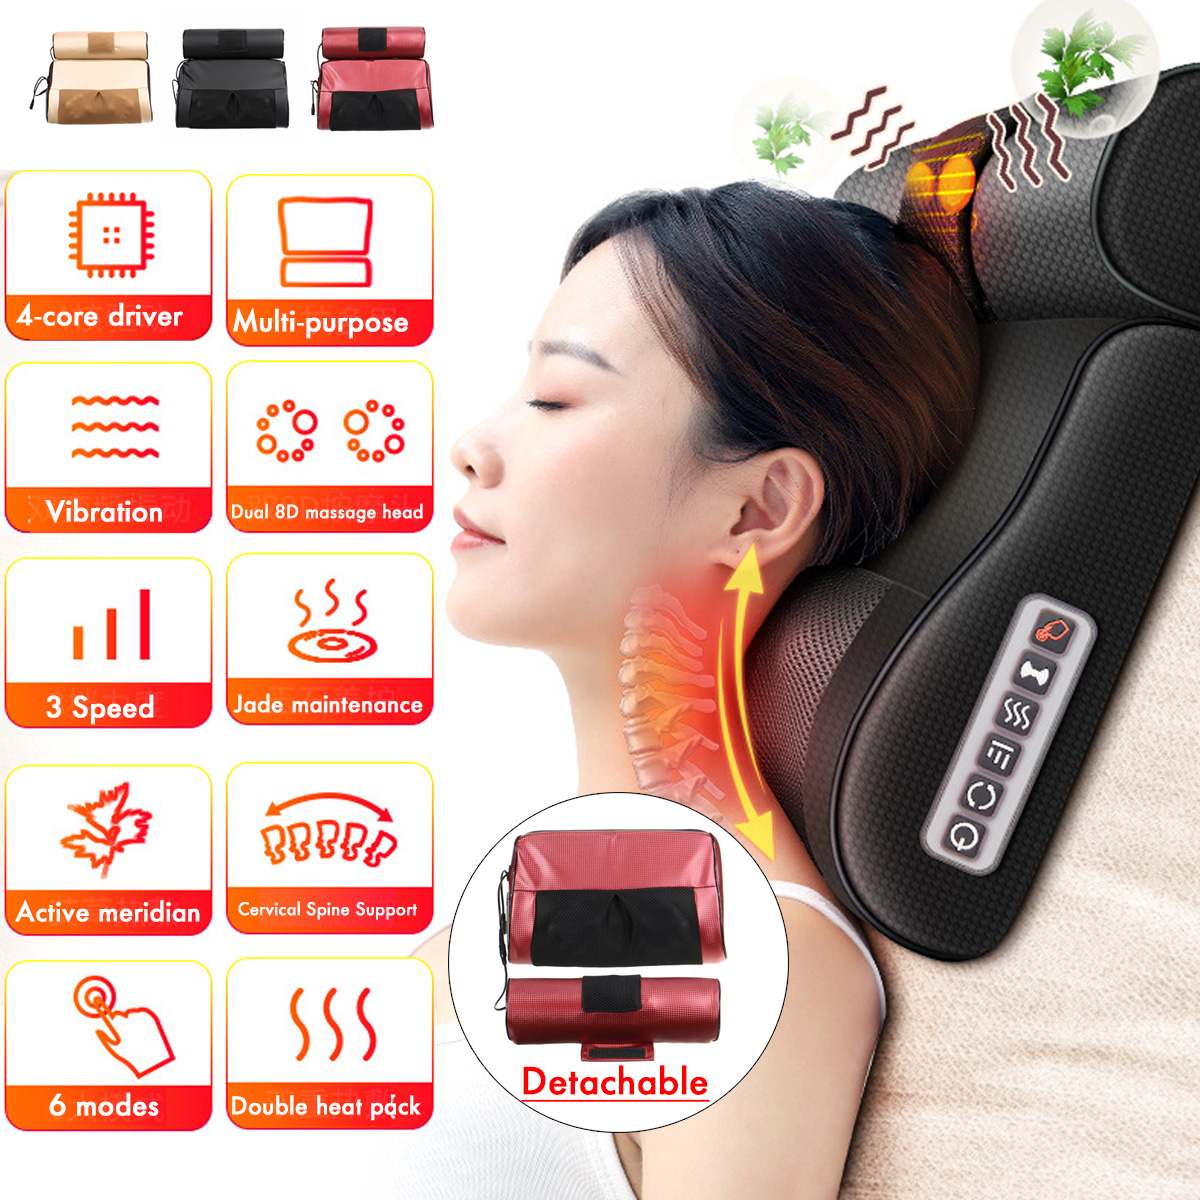 

6 Modes Relaxation Massage Pillow Vibrator Shoulder Back Whole Body Heating Kneading therapy pillow shiatsu Neck Massager